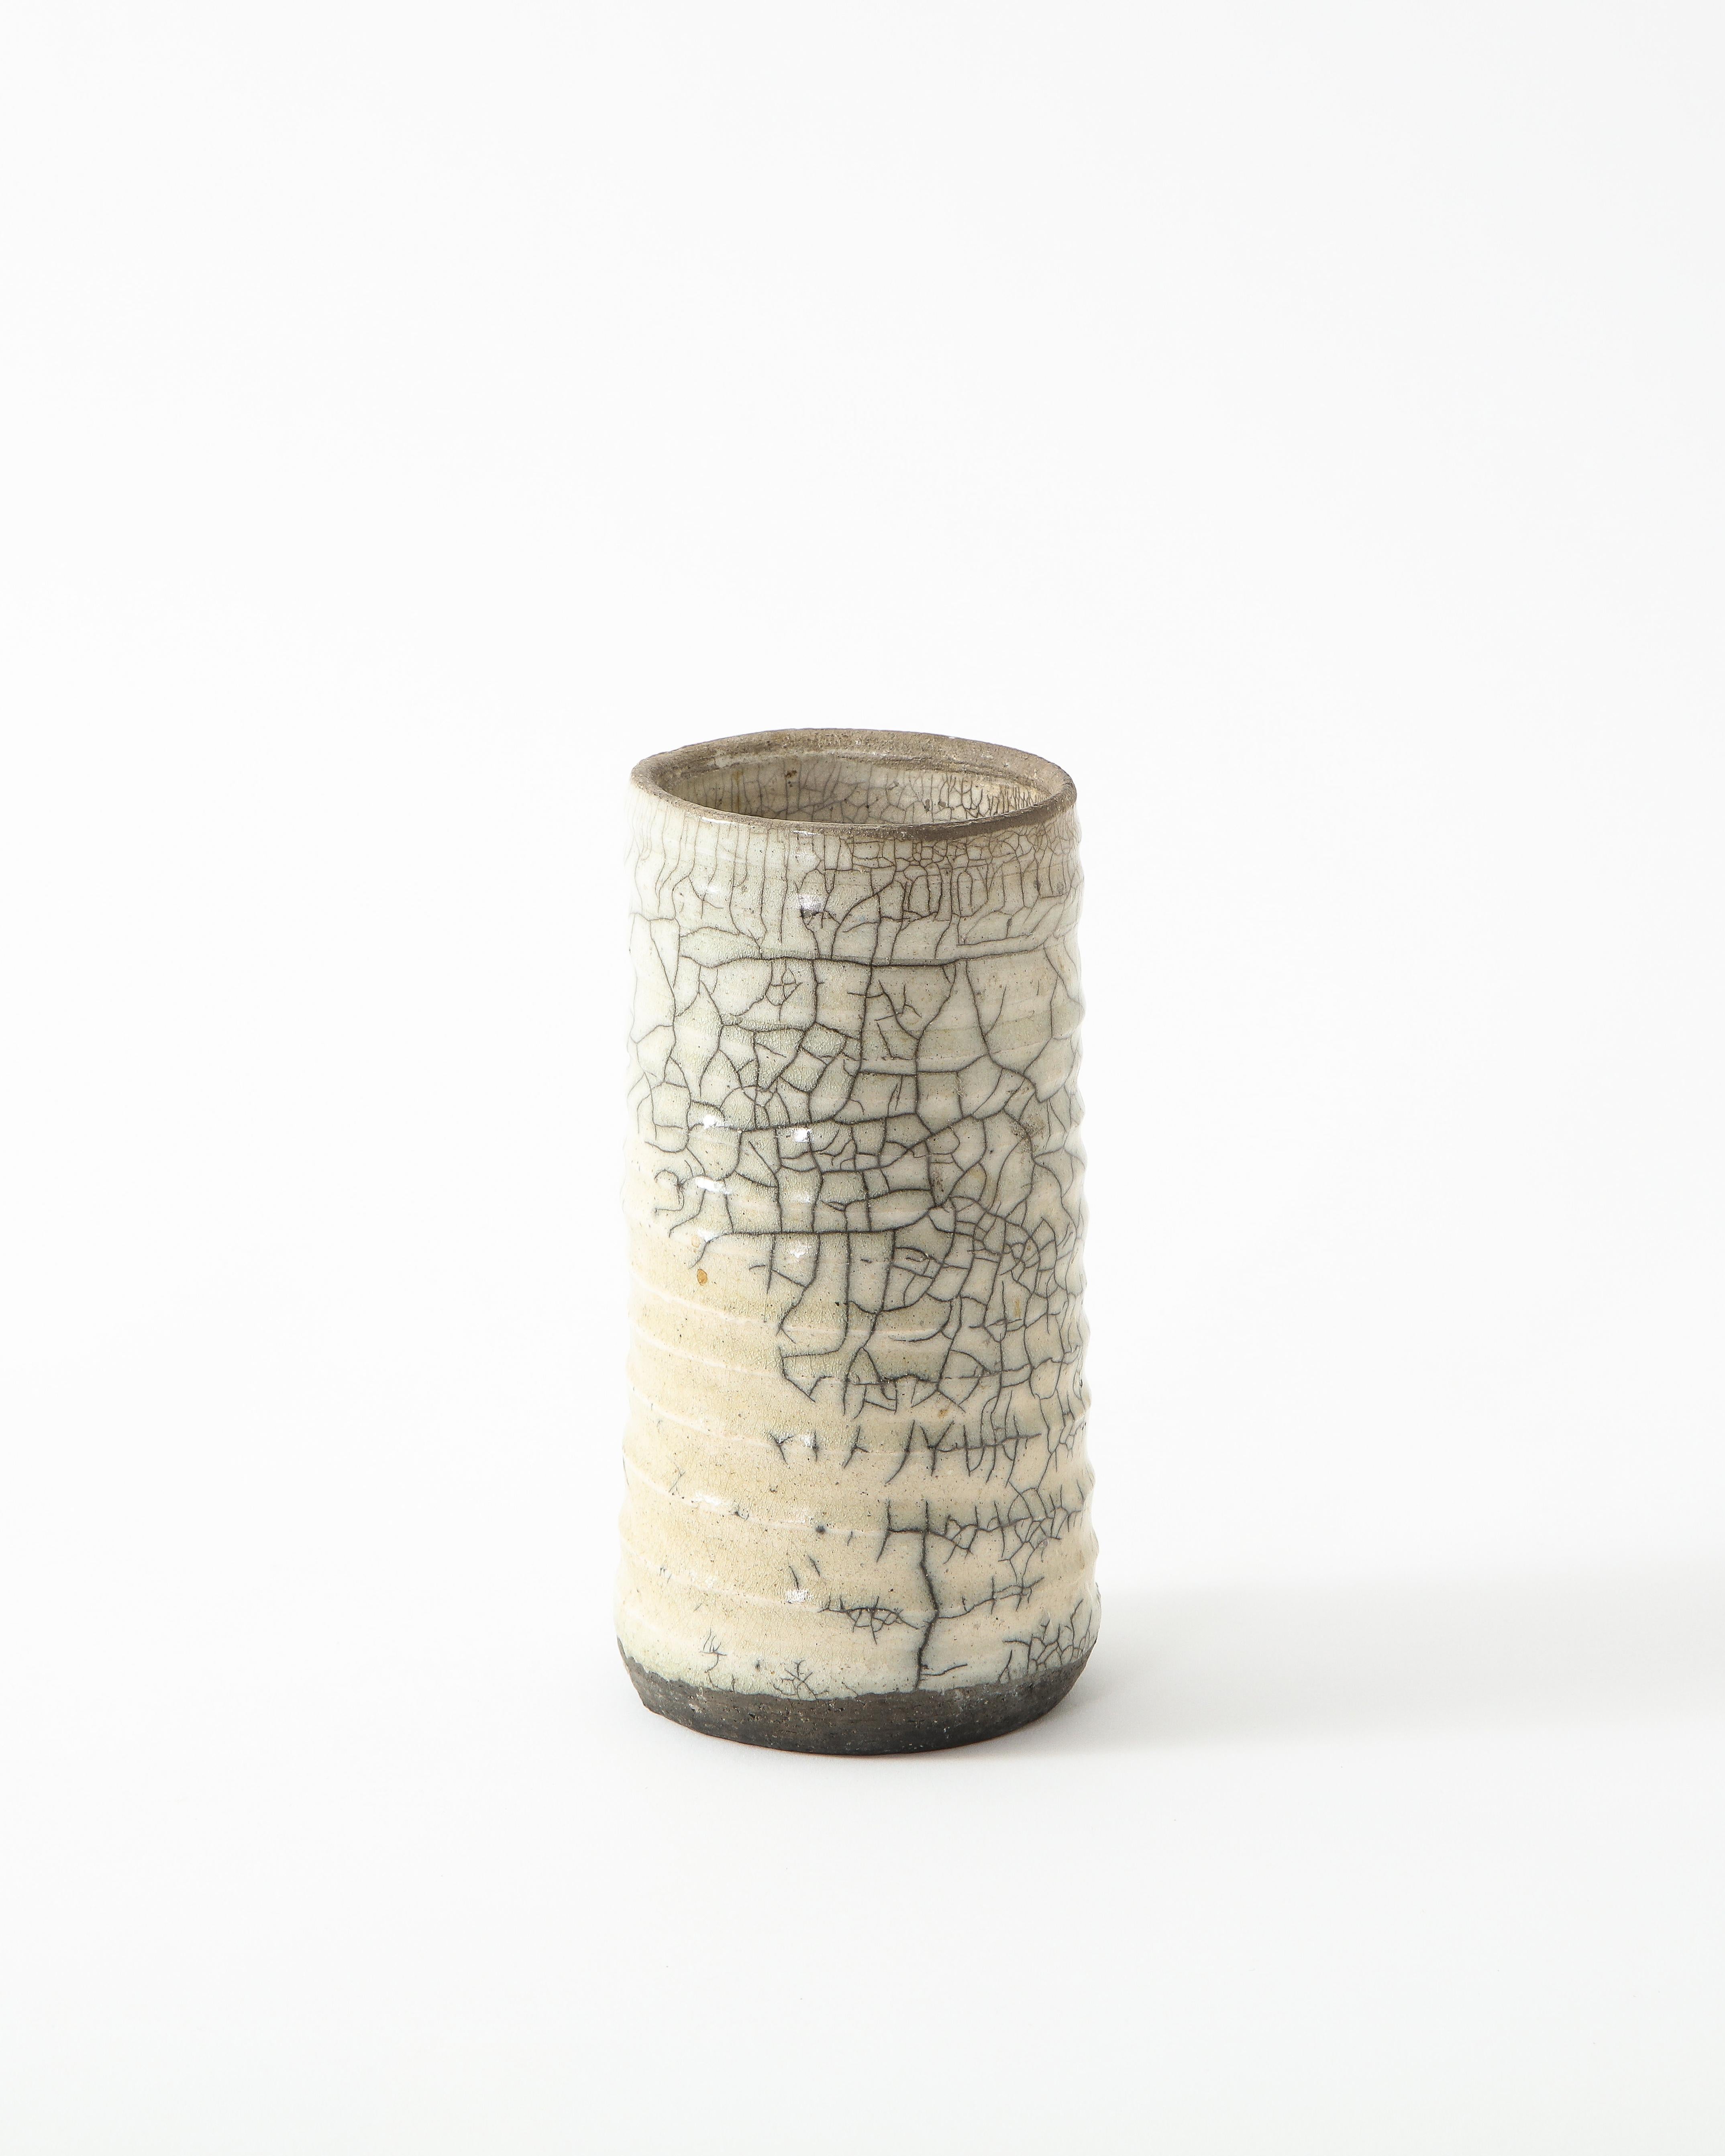 Glazed Off-White Ceramic Vase with Intricate Crackling